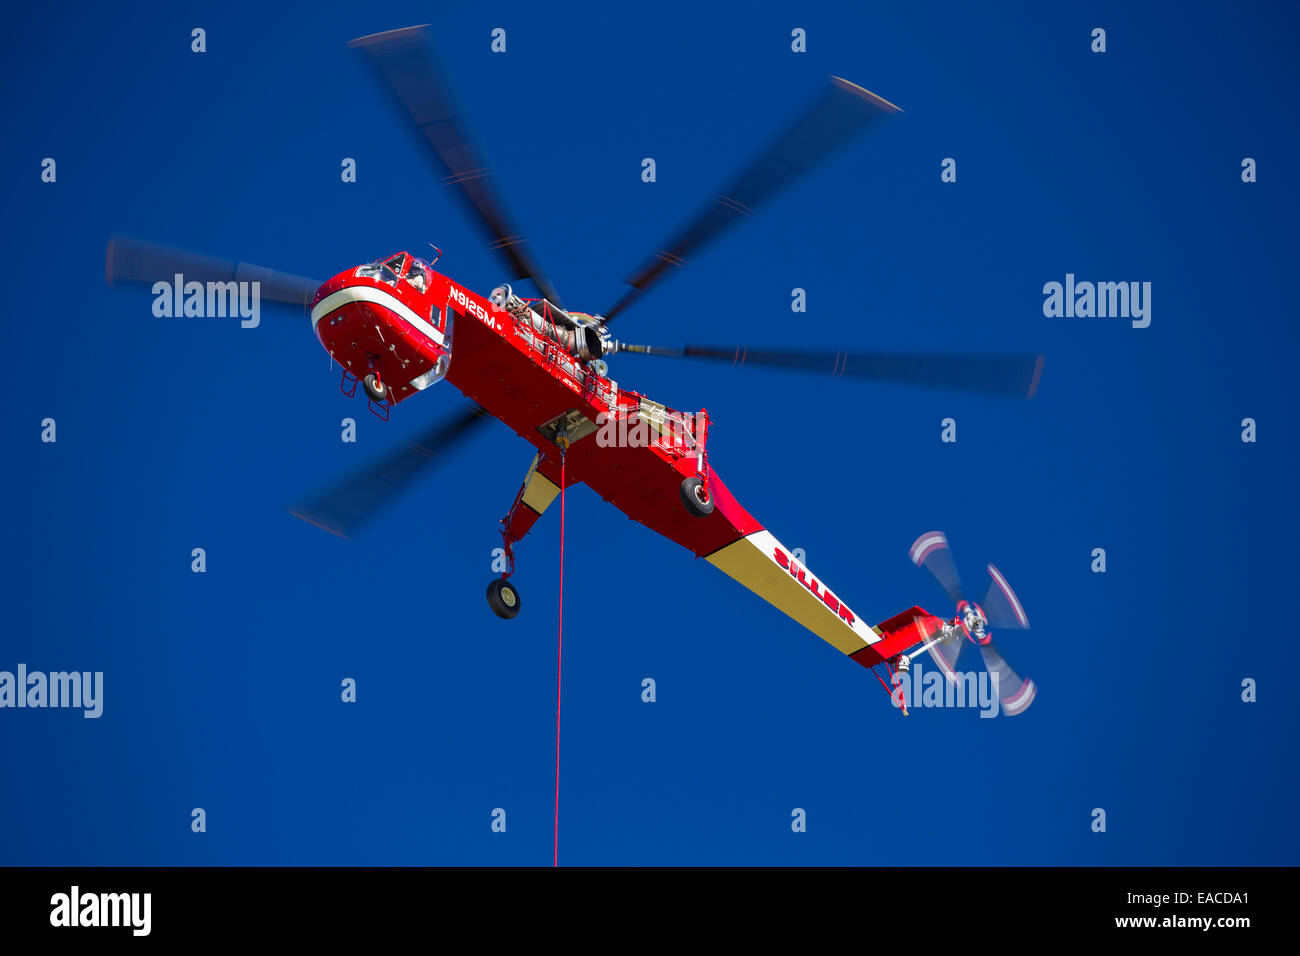 Sky kran helikopter -Fotos und -Bildmaterial in hoher Auflösung – Alamy